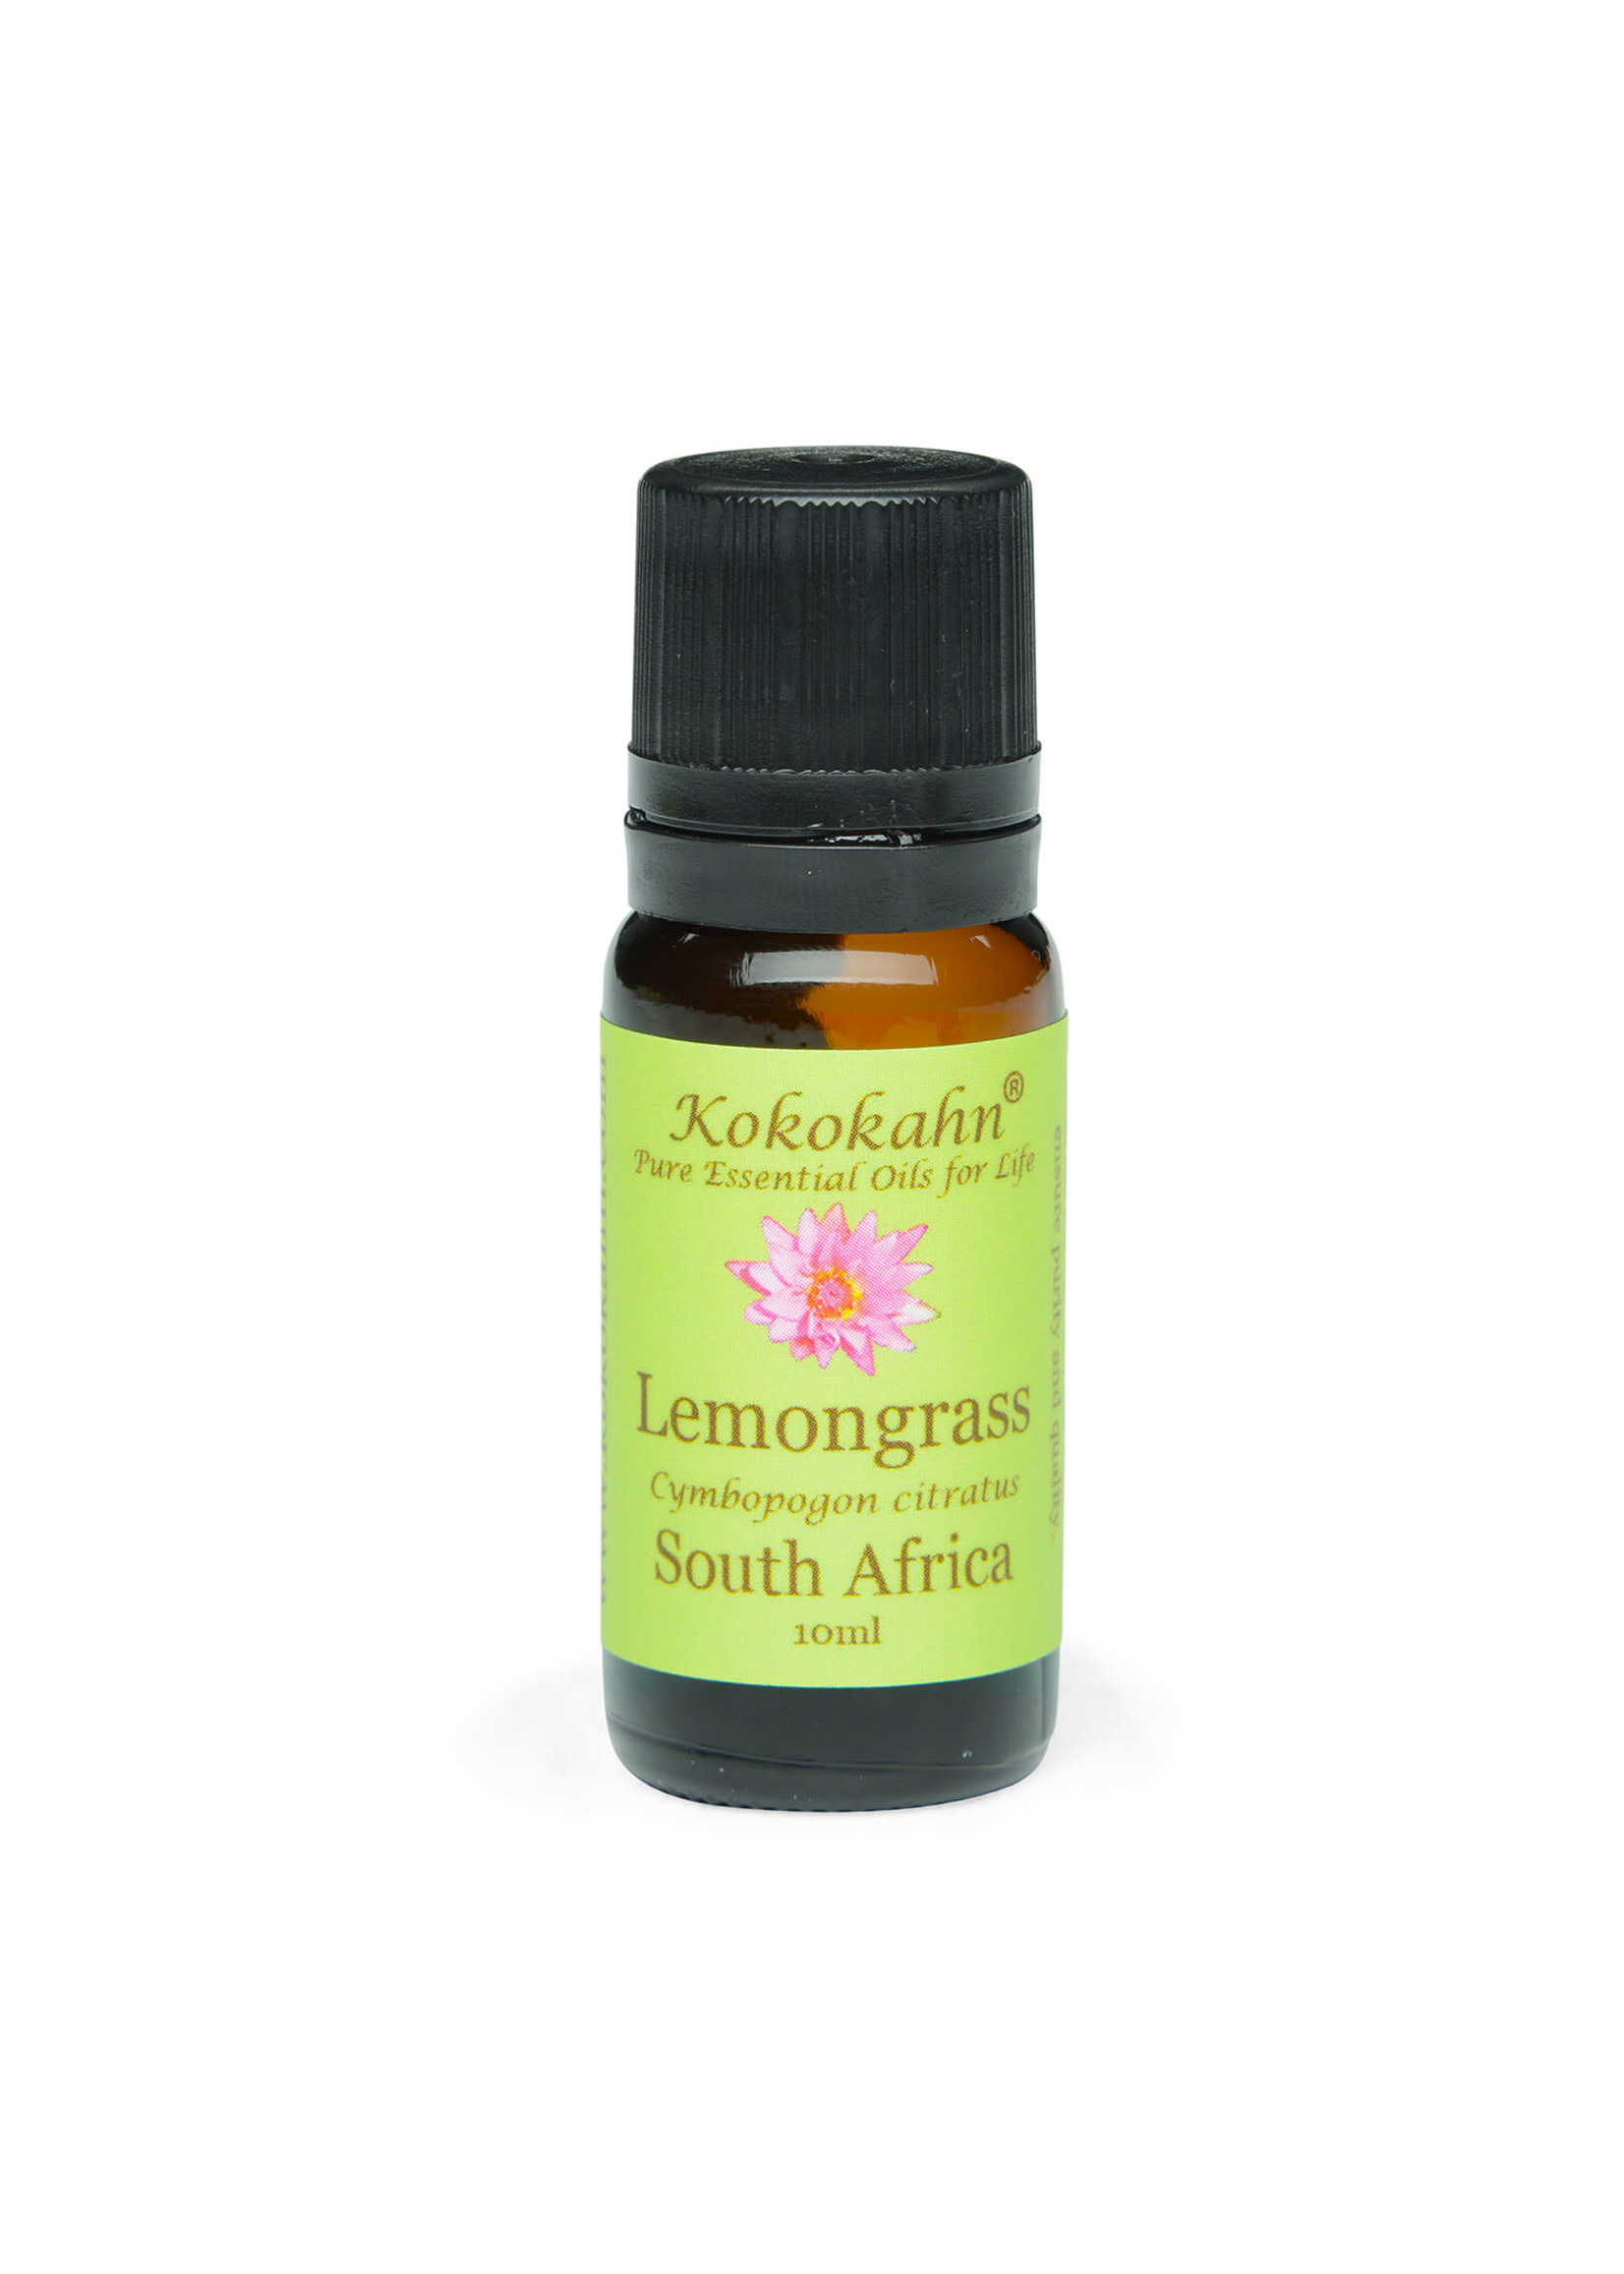 Kokokahn Lemongrass Essential Oil